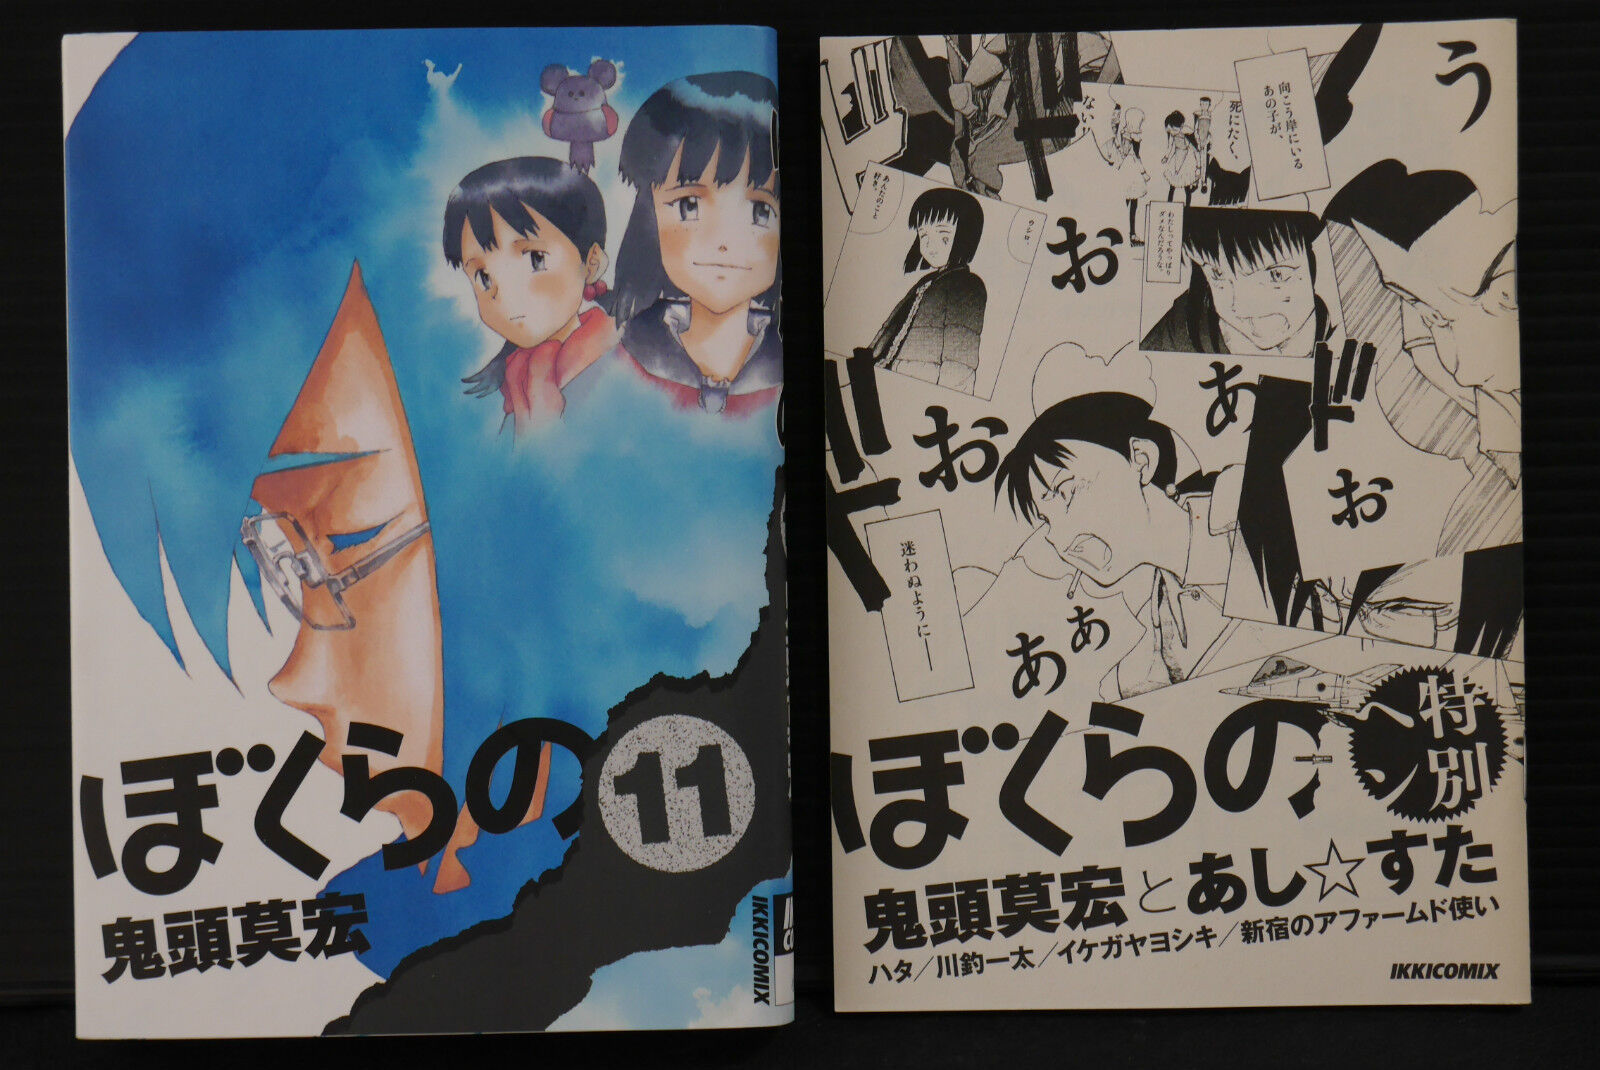 Bokurano Ours: Manga 11 Limited Edition - Mohiro Kitoh - JAPAN